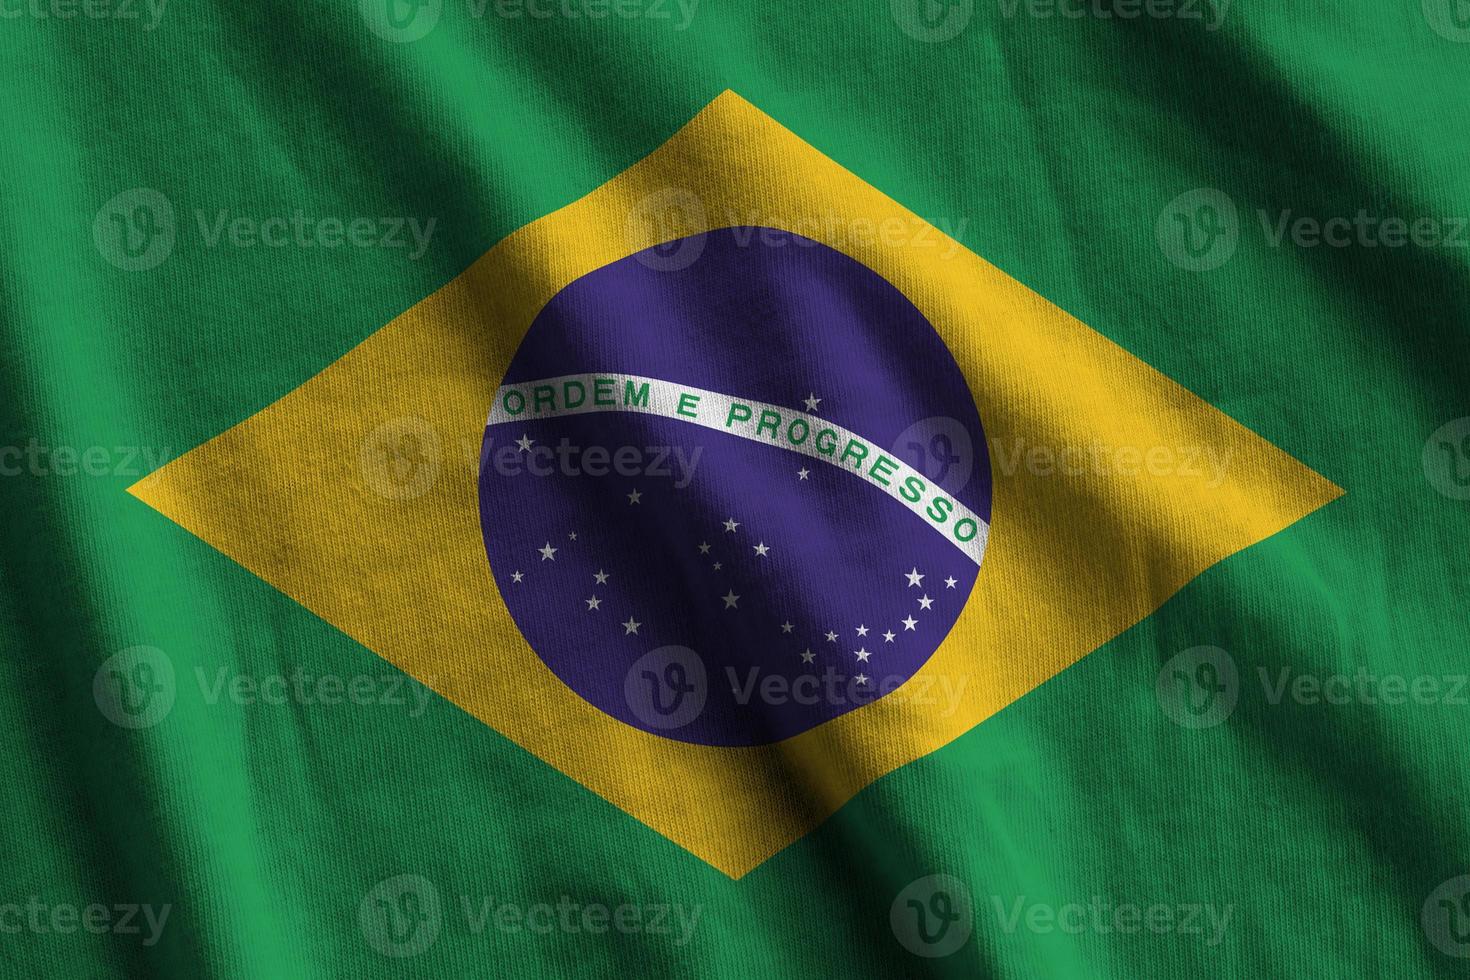 bandeira do brasil com grandes dobras acenando perto sob a luz do estúdio dentro de casa. os símbolos e cores oficiais no banner foto